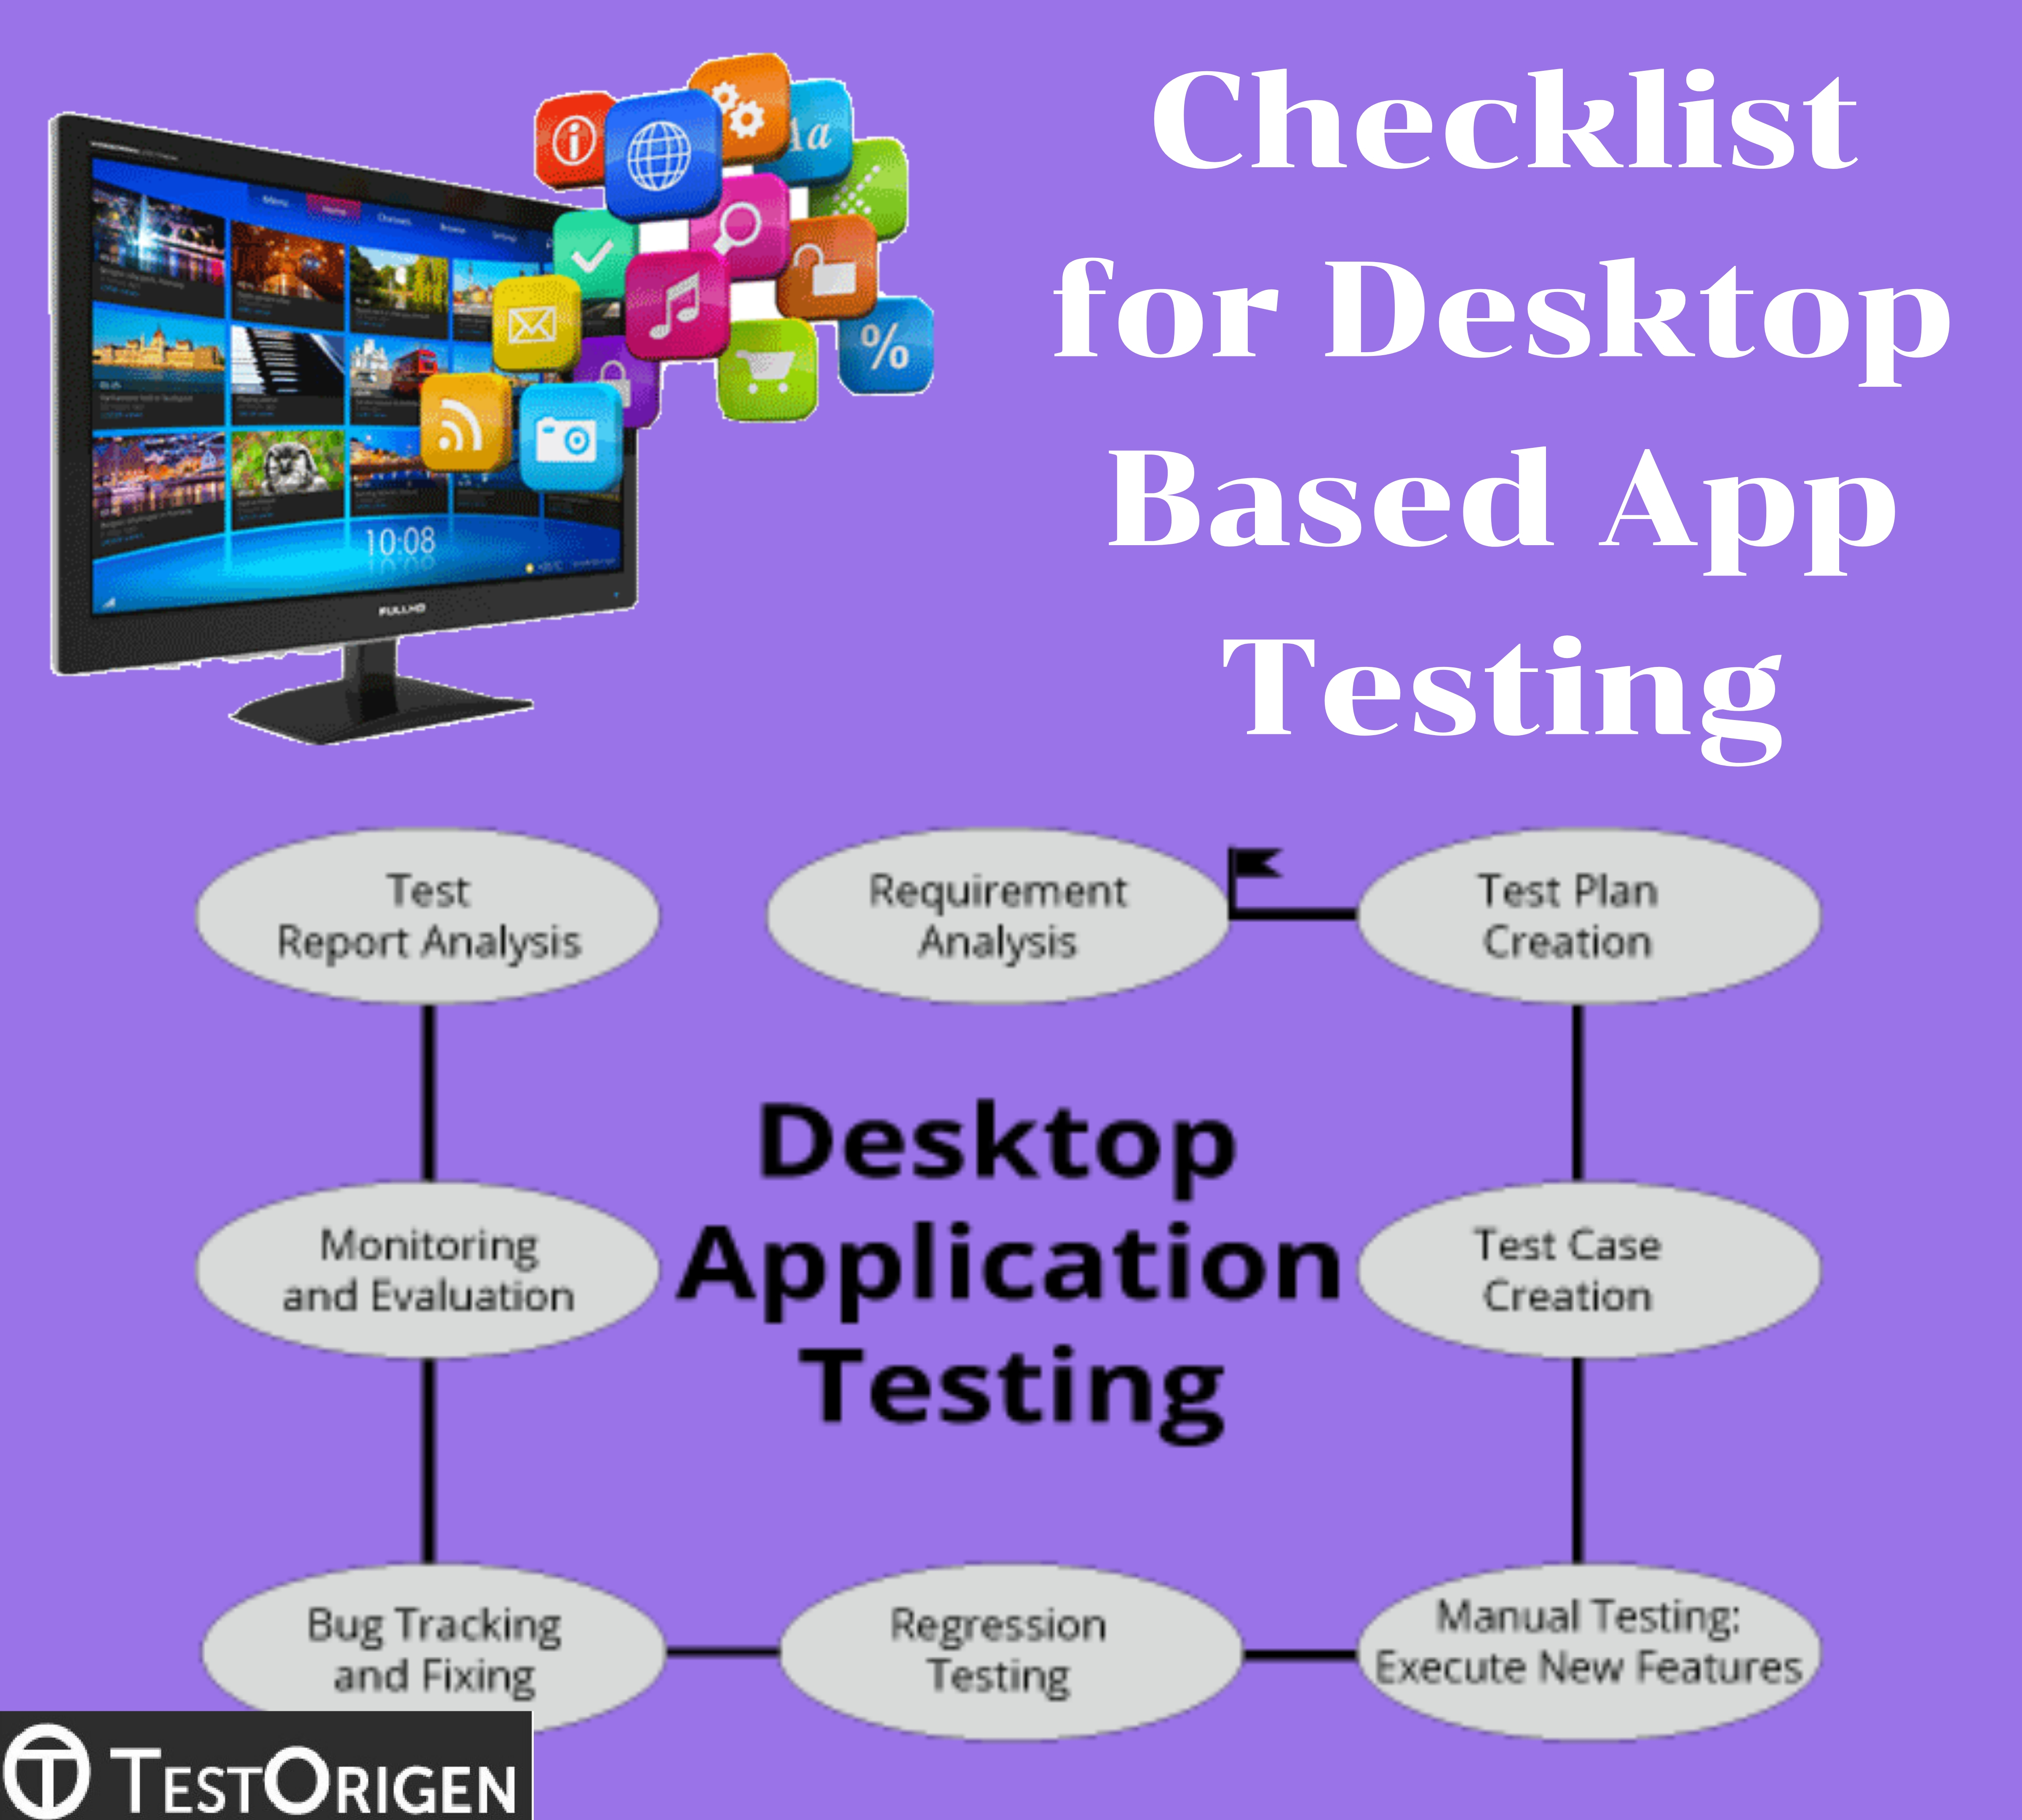 Checklist for Desktop Based App Testing